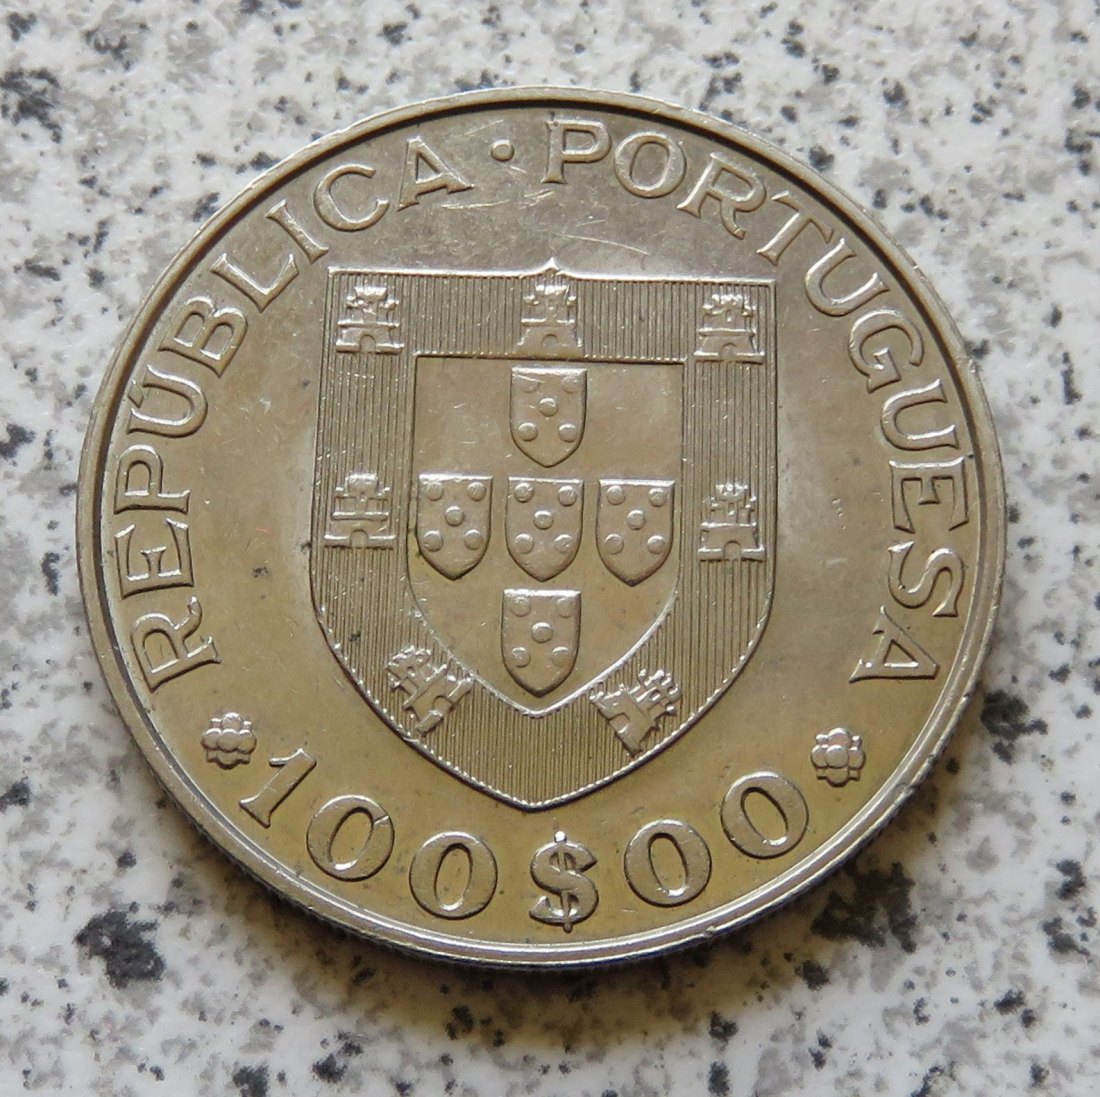  Portugal 100 Escudos 1984   